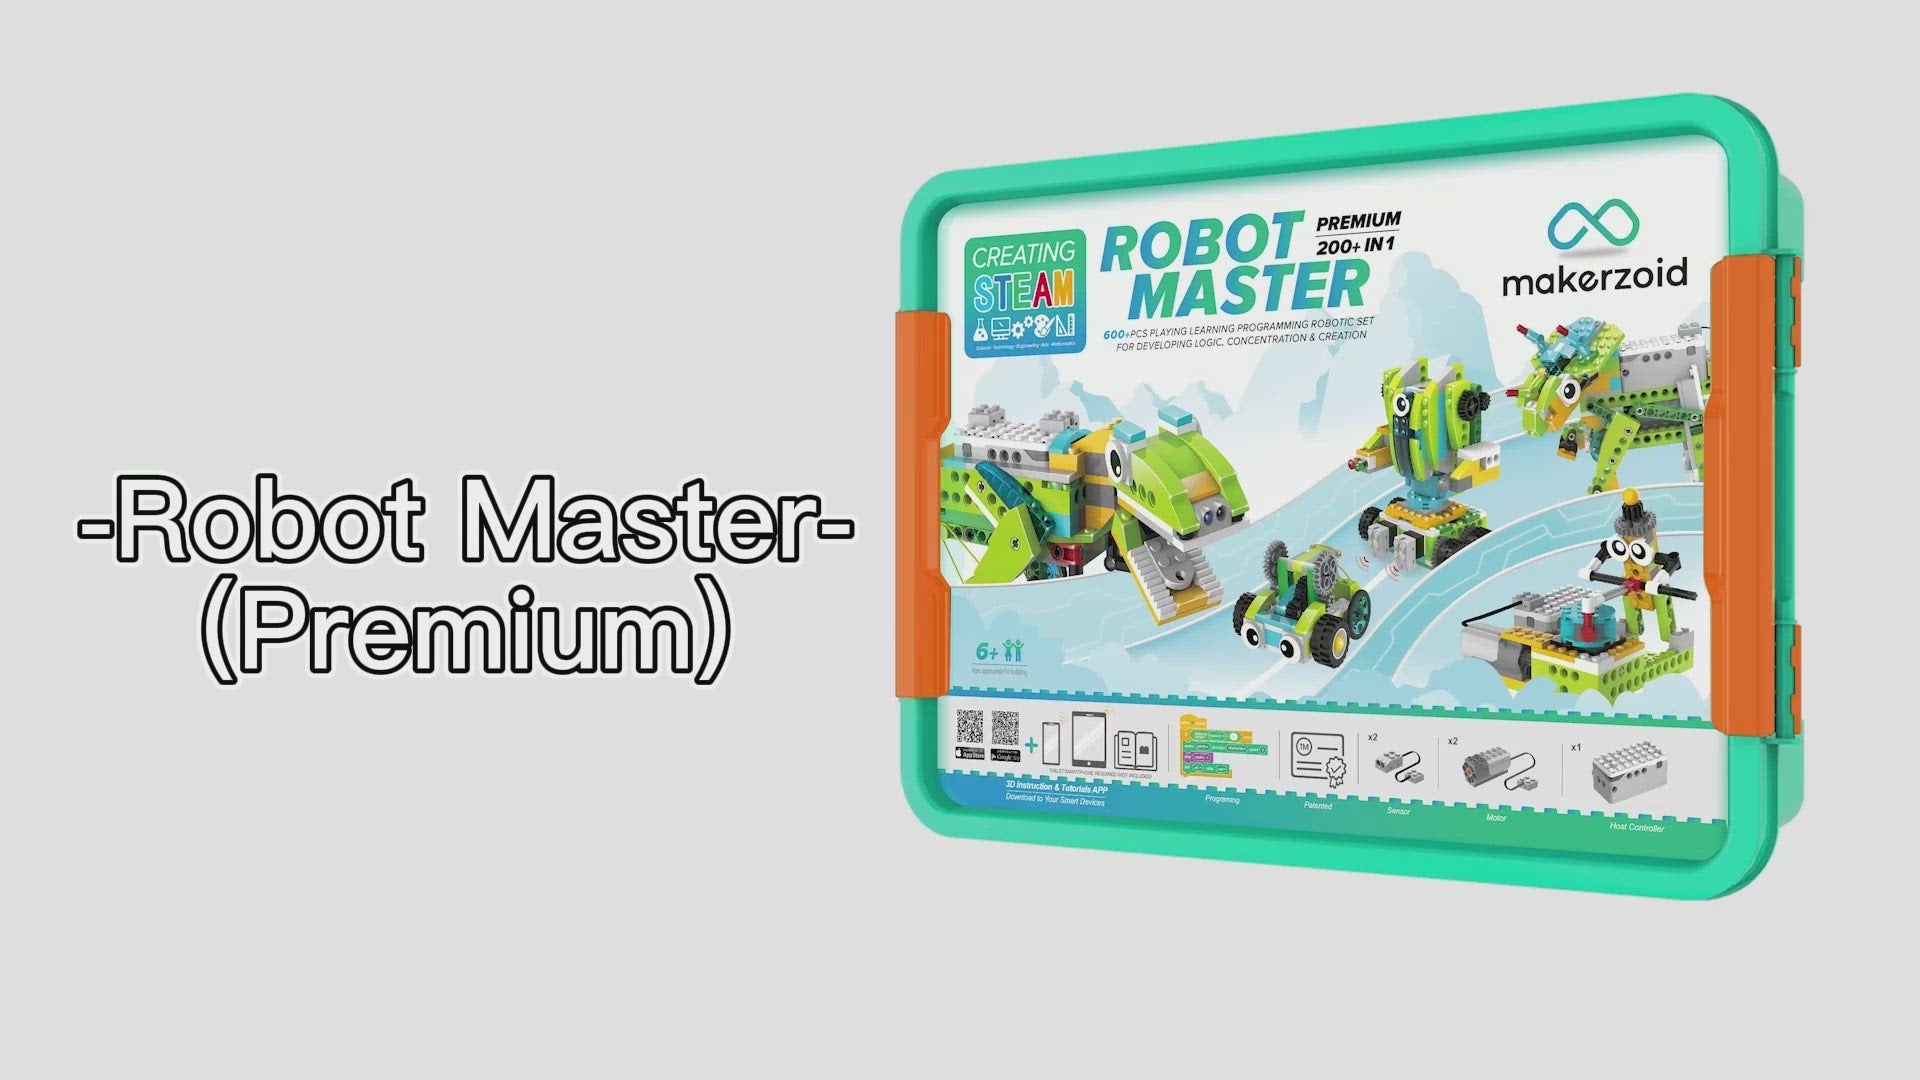 Makerzoid Programmable Toys Robot Master, 200-in-1 Coding Robot Kit, STEM APP-Control Robotics Kit, Building Toys Learning Kit for Kids